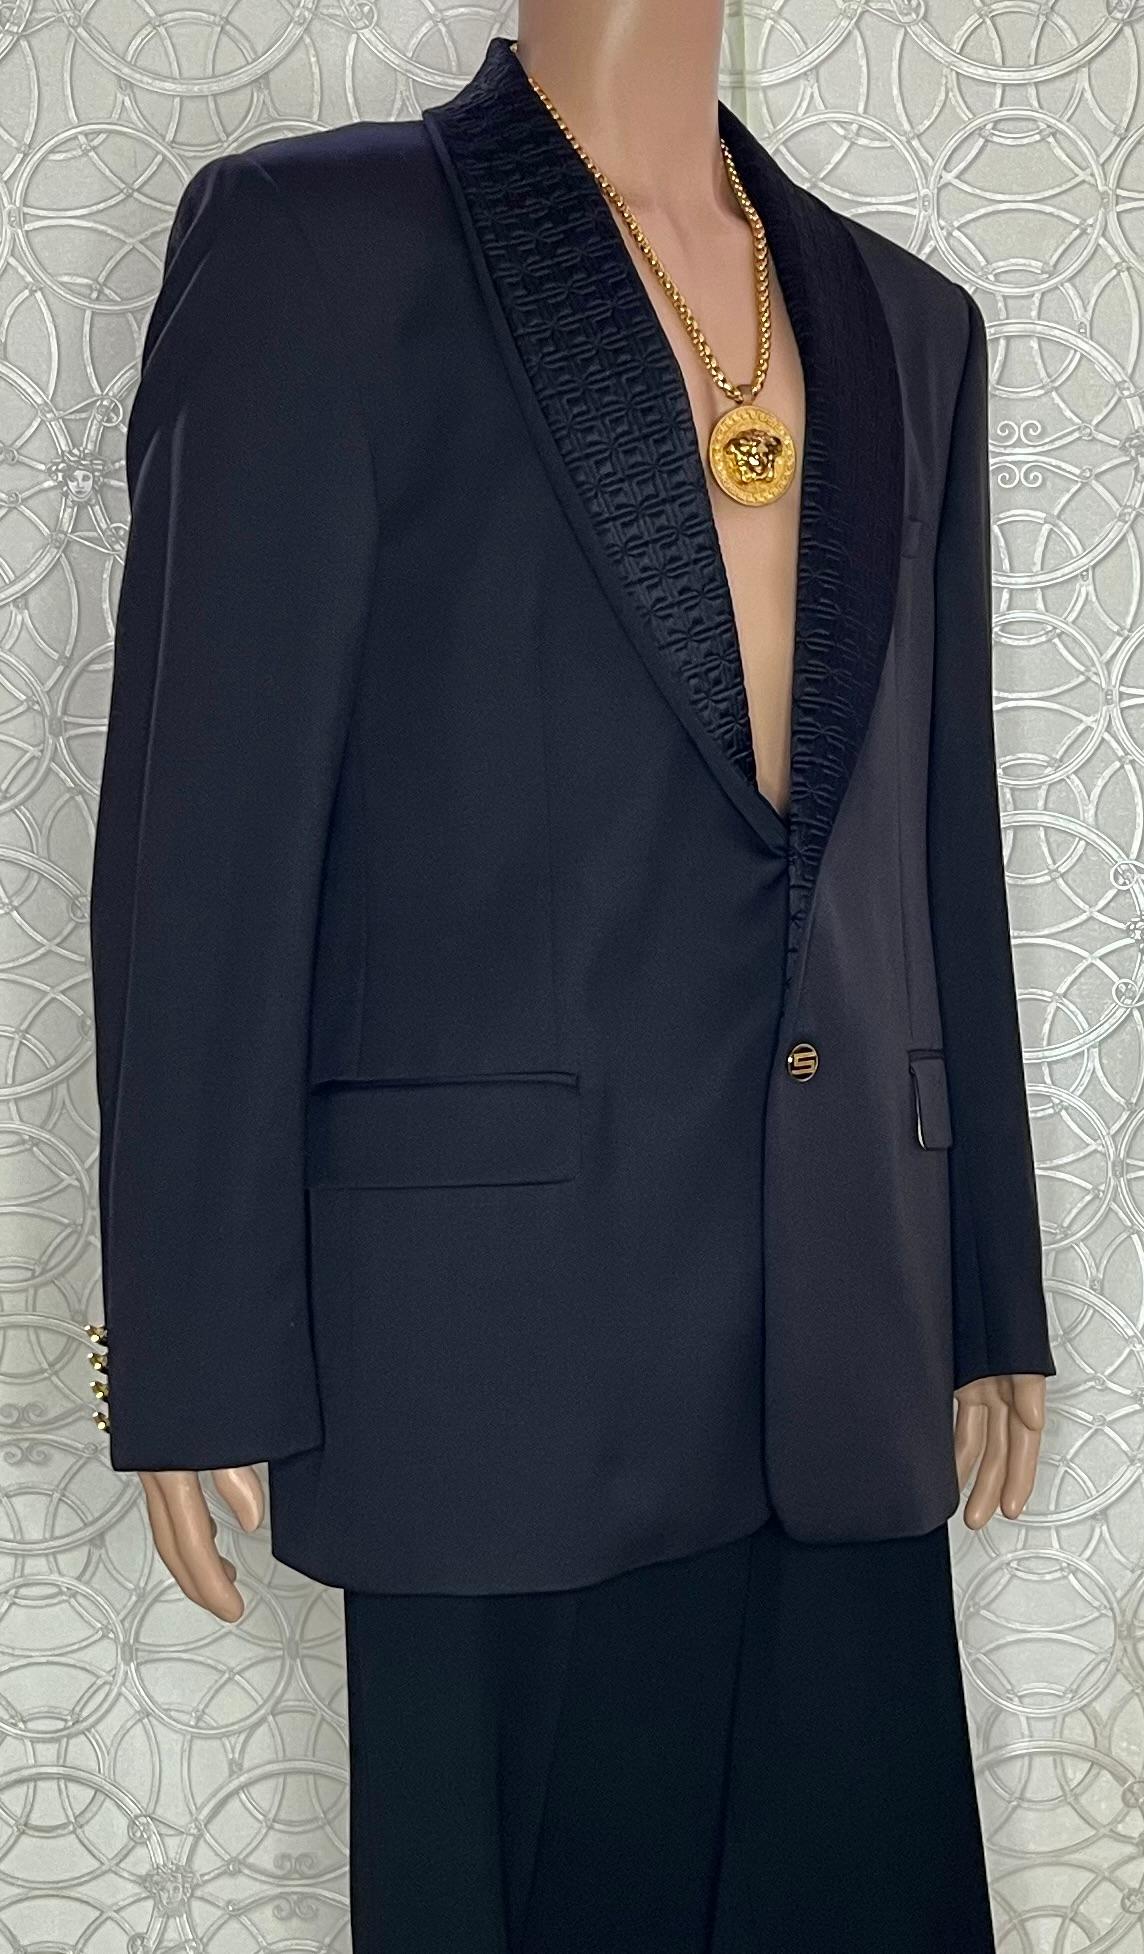 GIANNI VERSACE SUIT

Black wool suit 
Two button closure
Two pockets on jacket
Gold-tone Medusa buttons

Content: wool

IT Size 56 -  US 46 (3XL)

Measurements:
shoulder to shoulder: 20 1/2